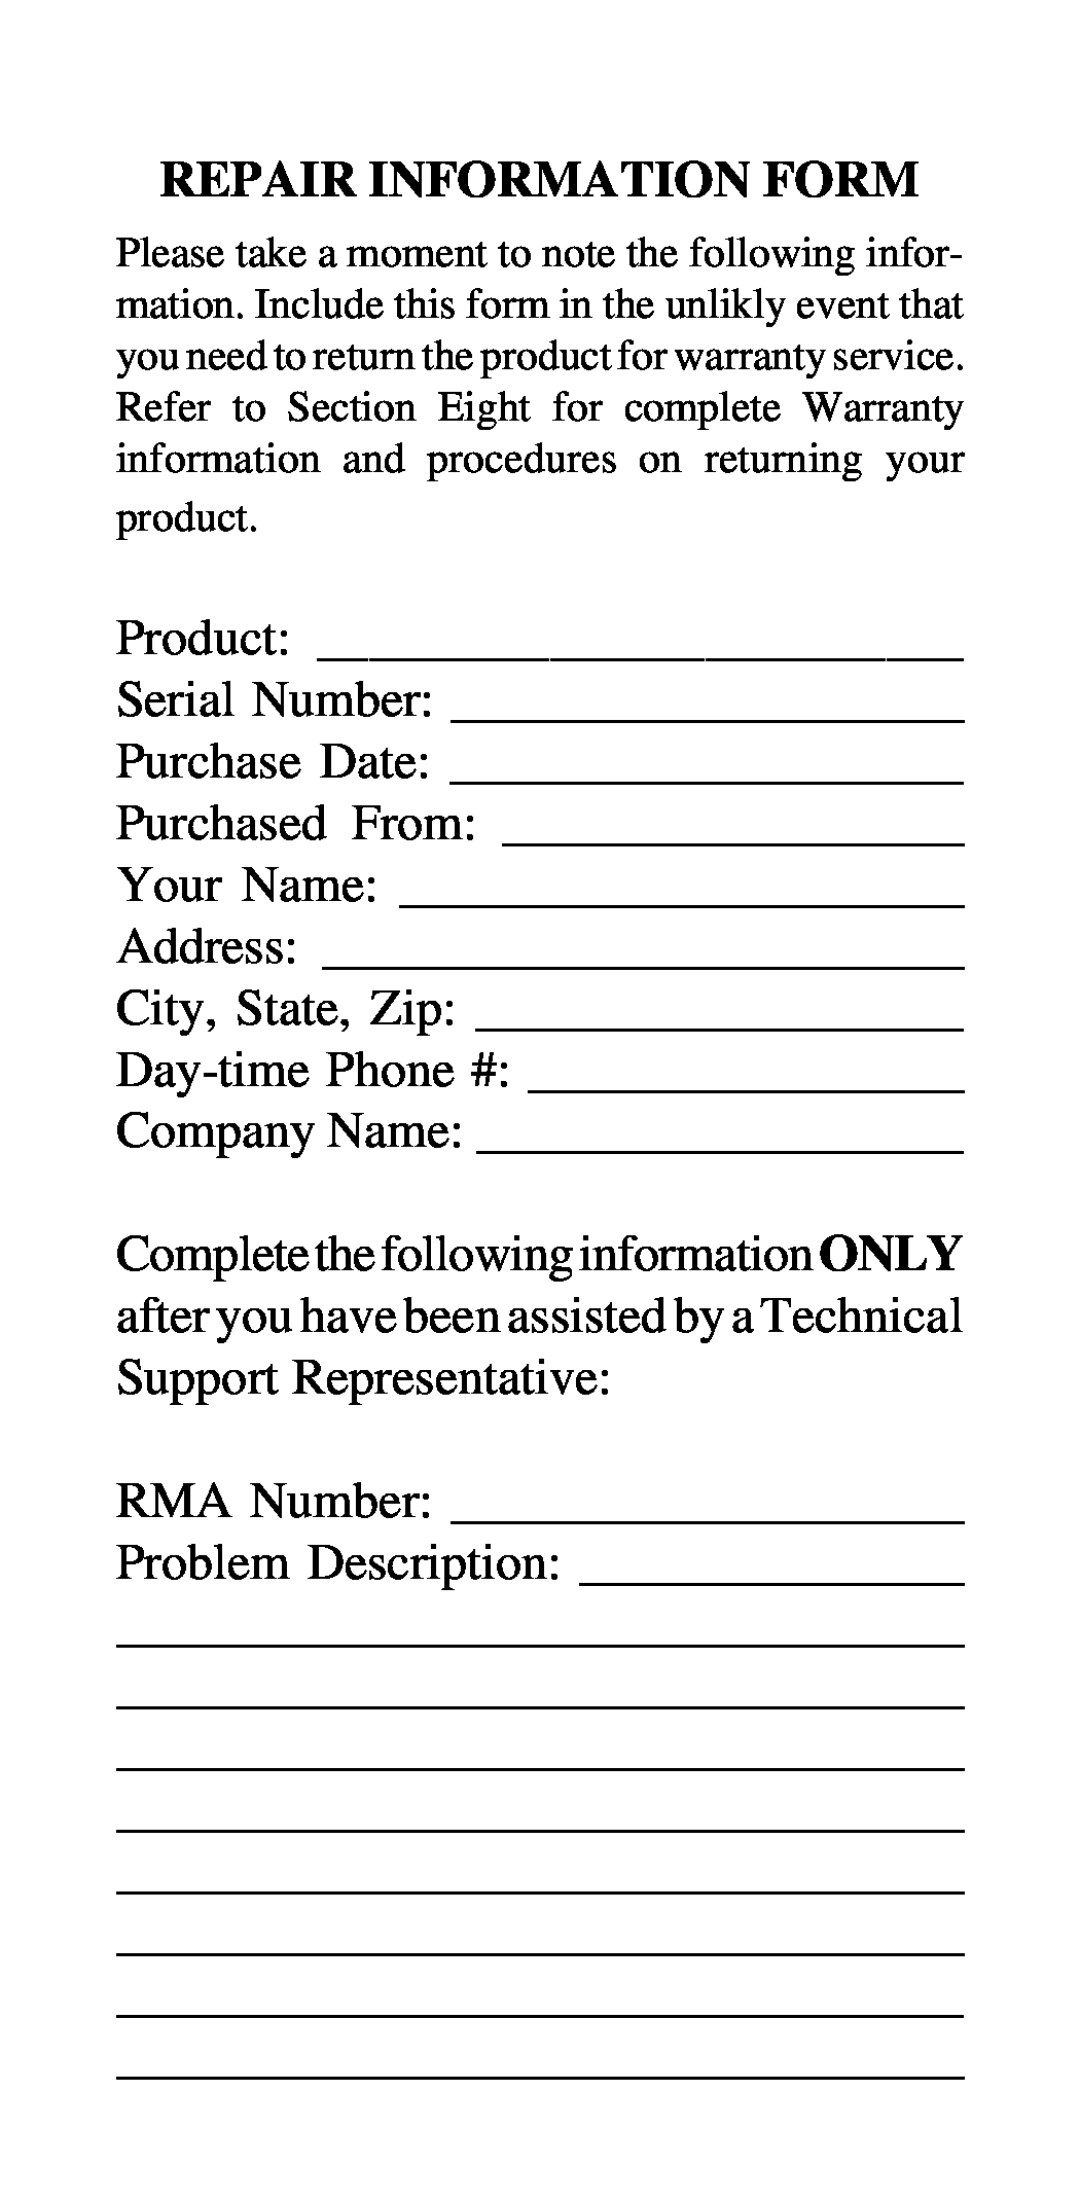 MaxTech NX-16 manual Repair Information Form 